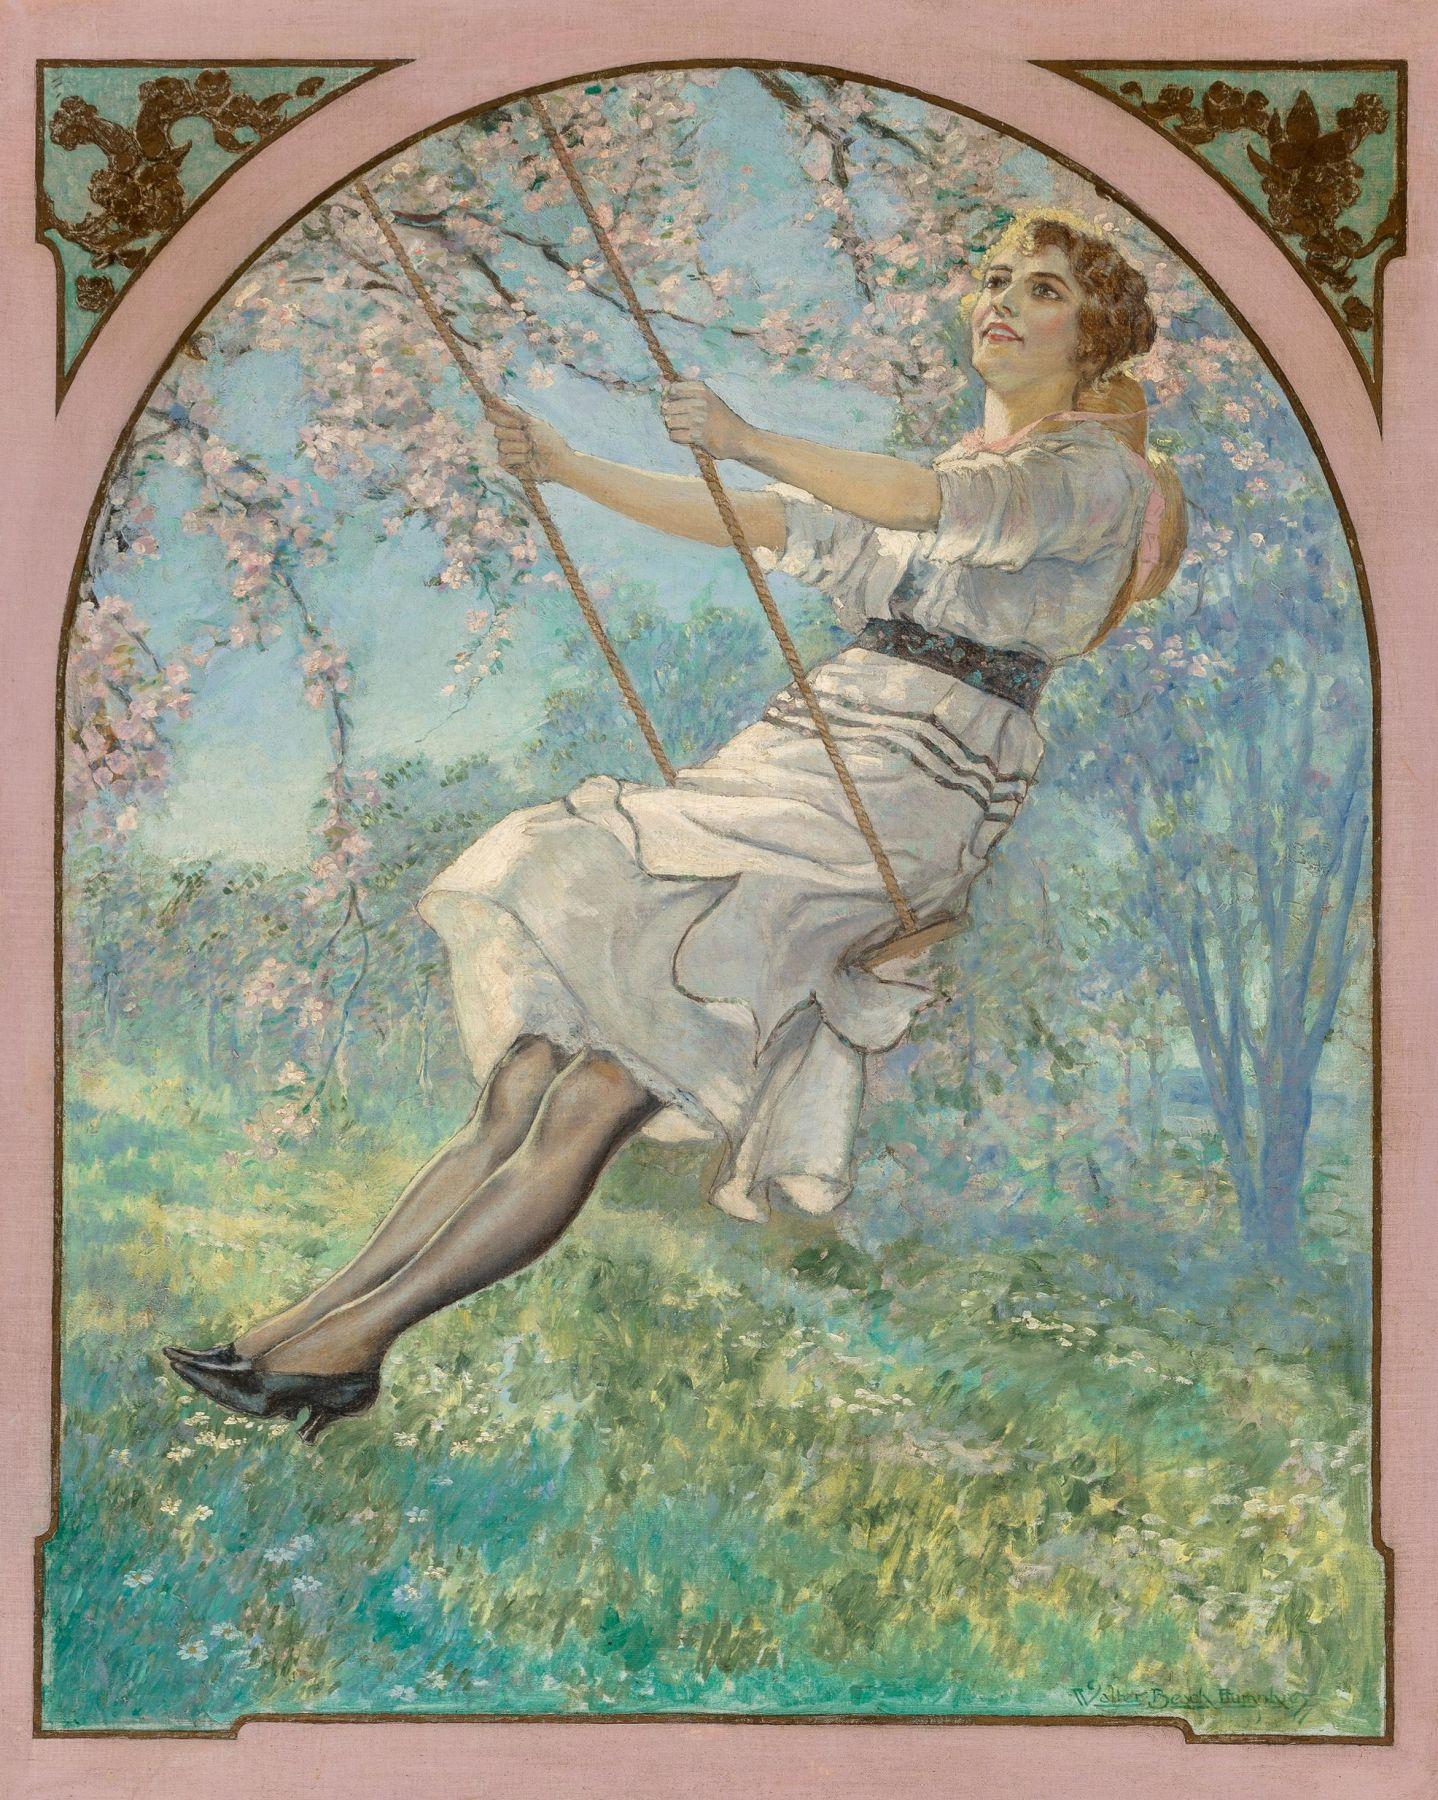 Walter Beach Humphrey Figurative Painting – Lady on Swing